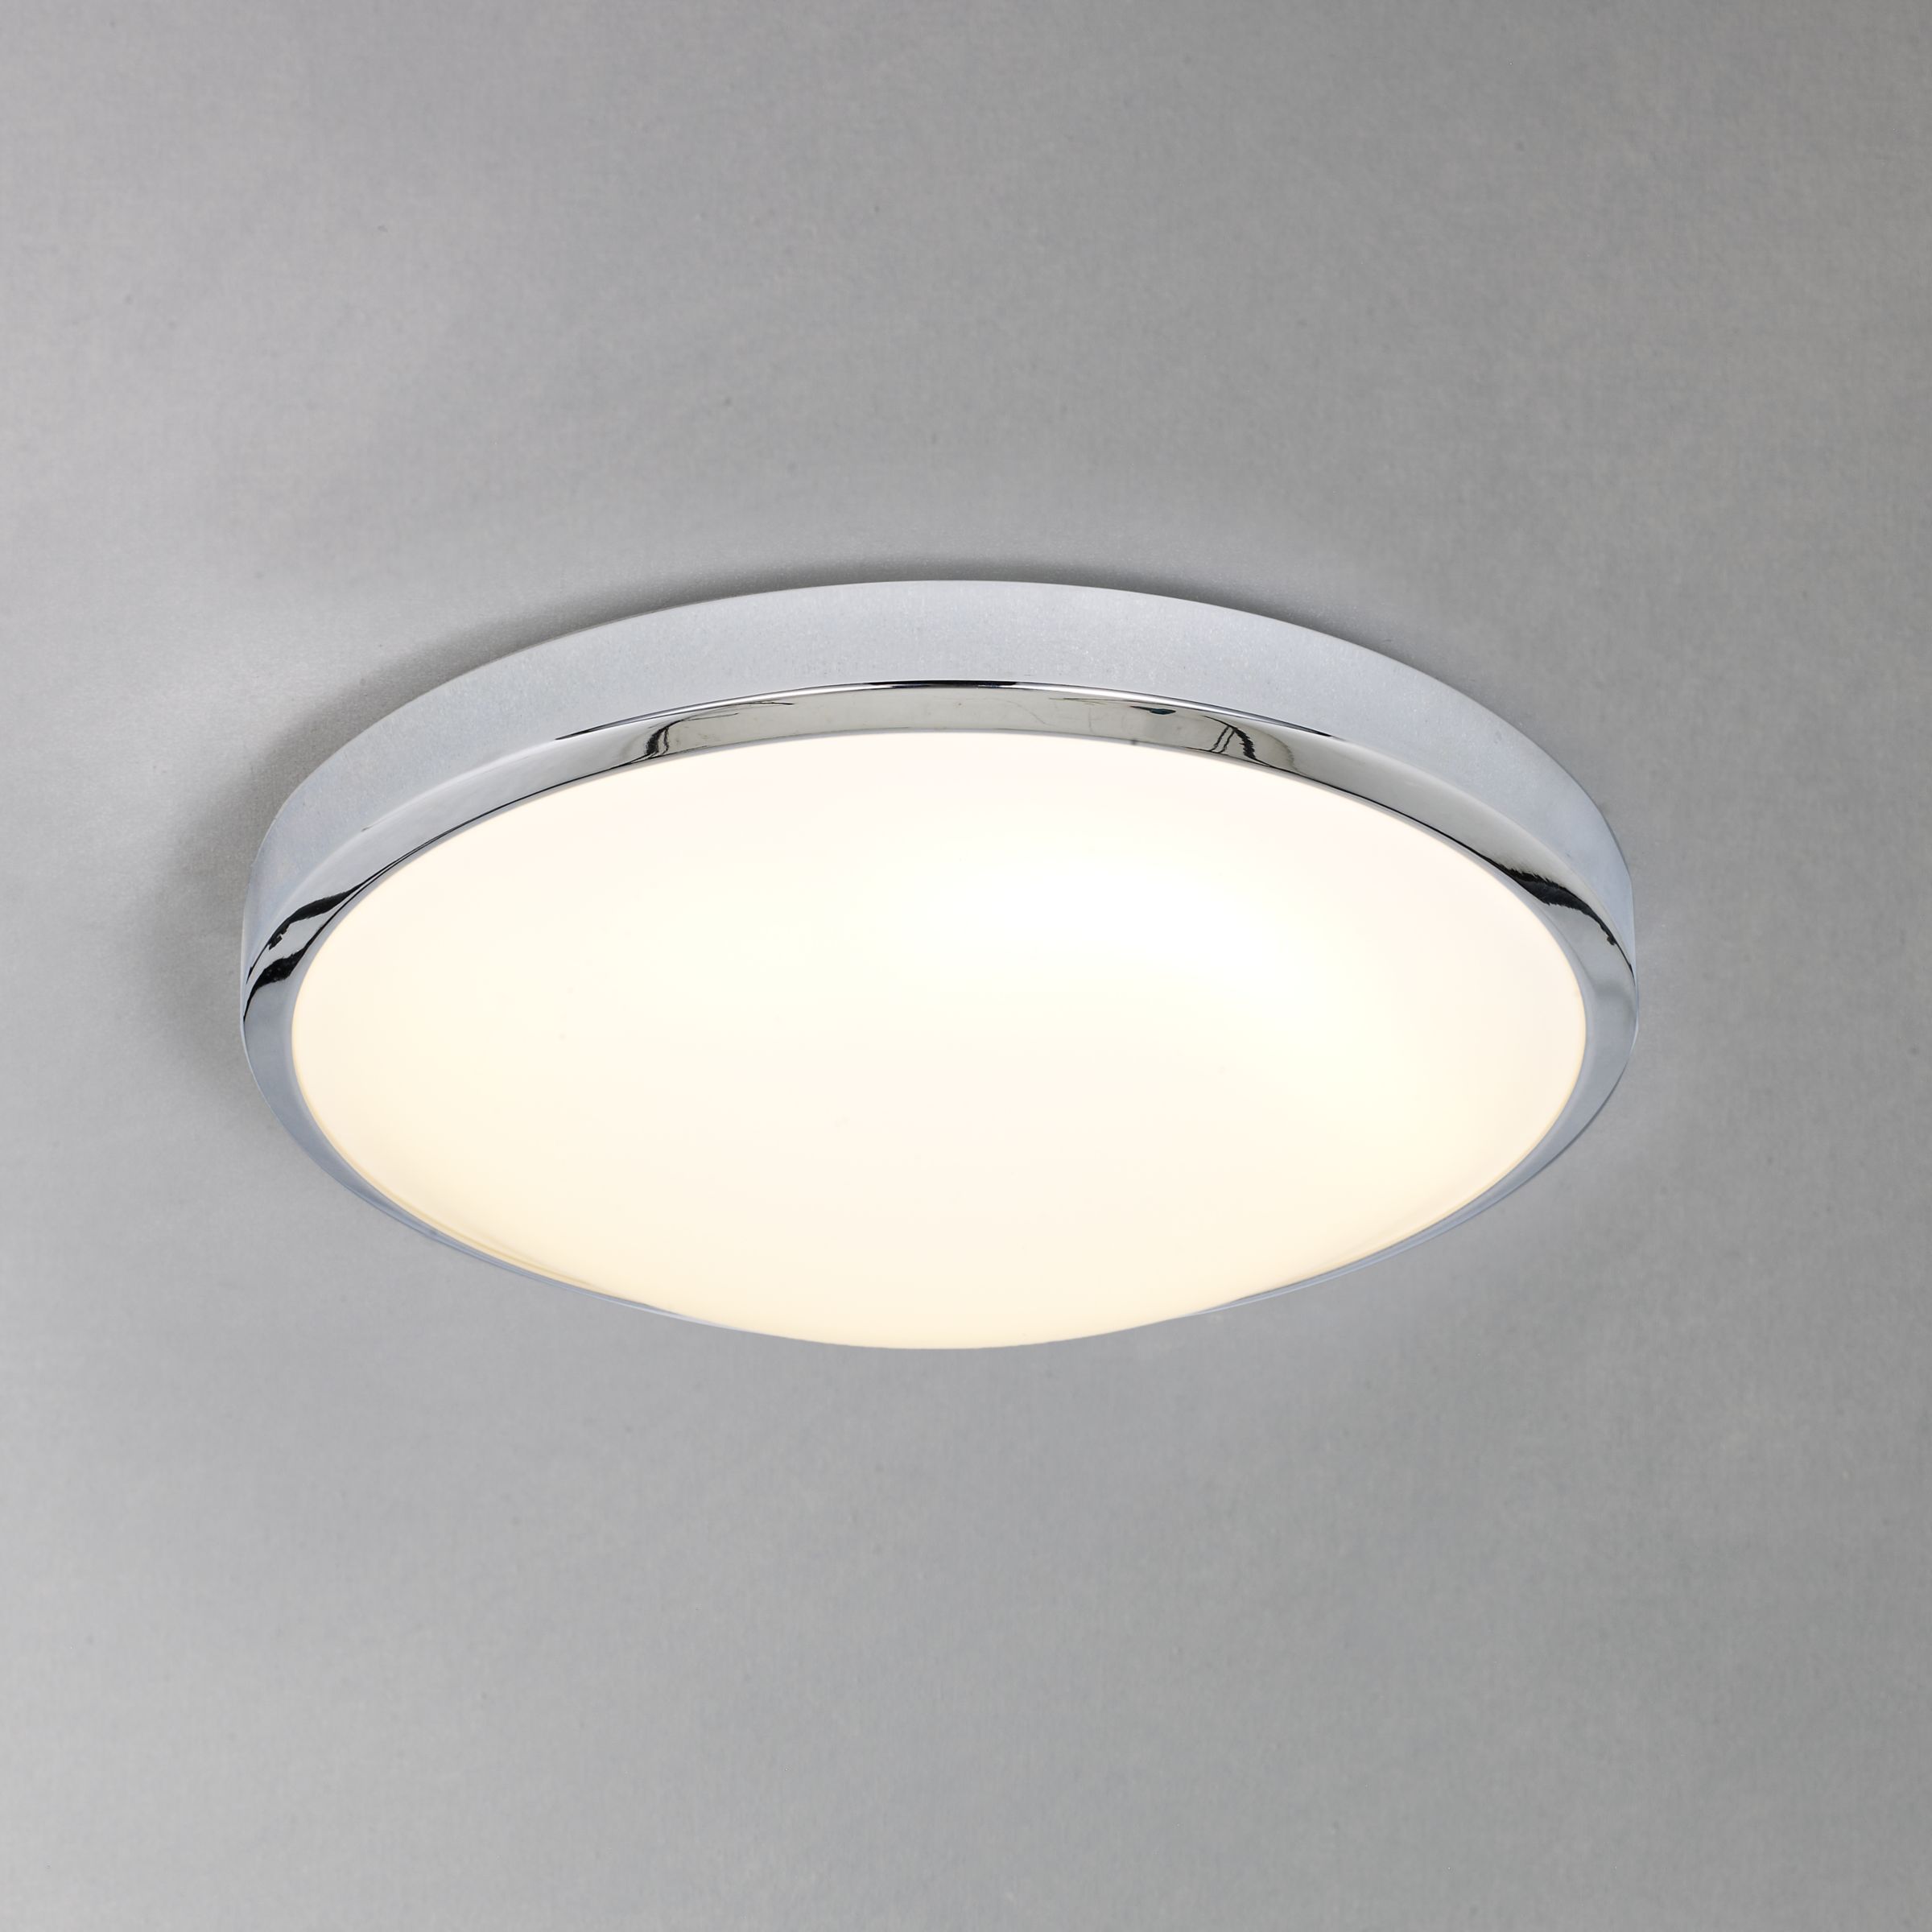 ASTRO Energy Saving Bathroom Light 148373